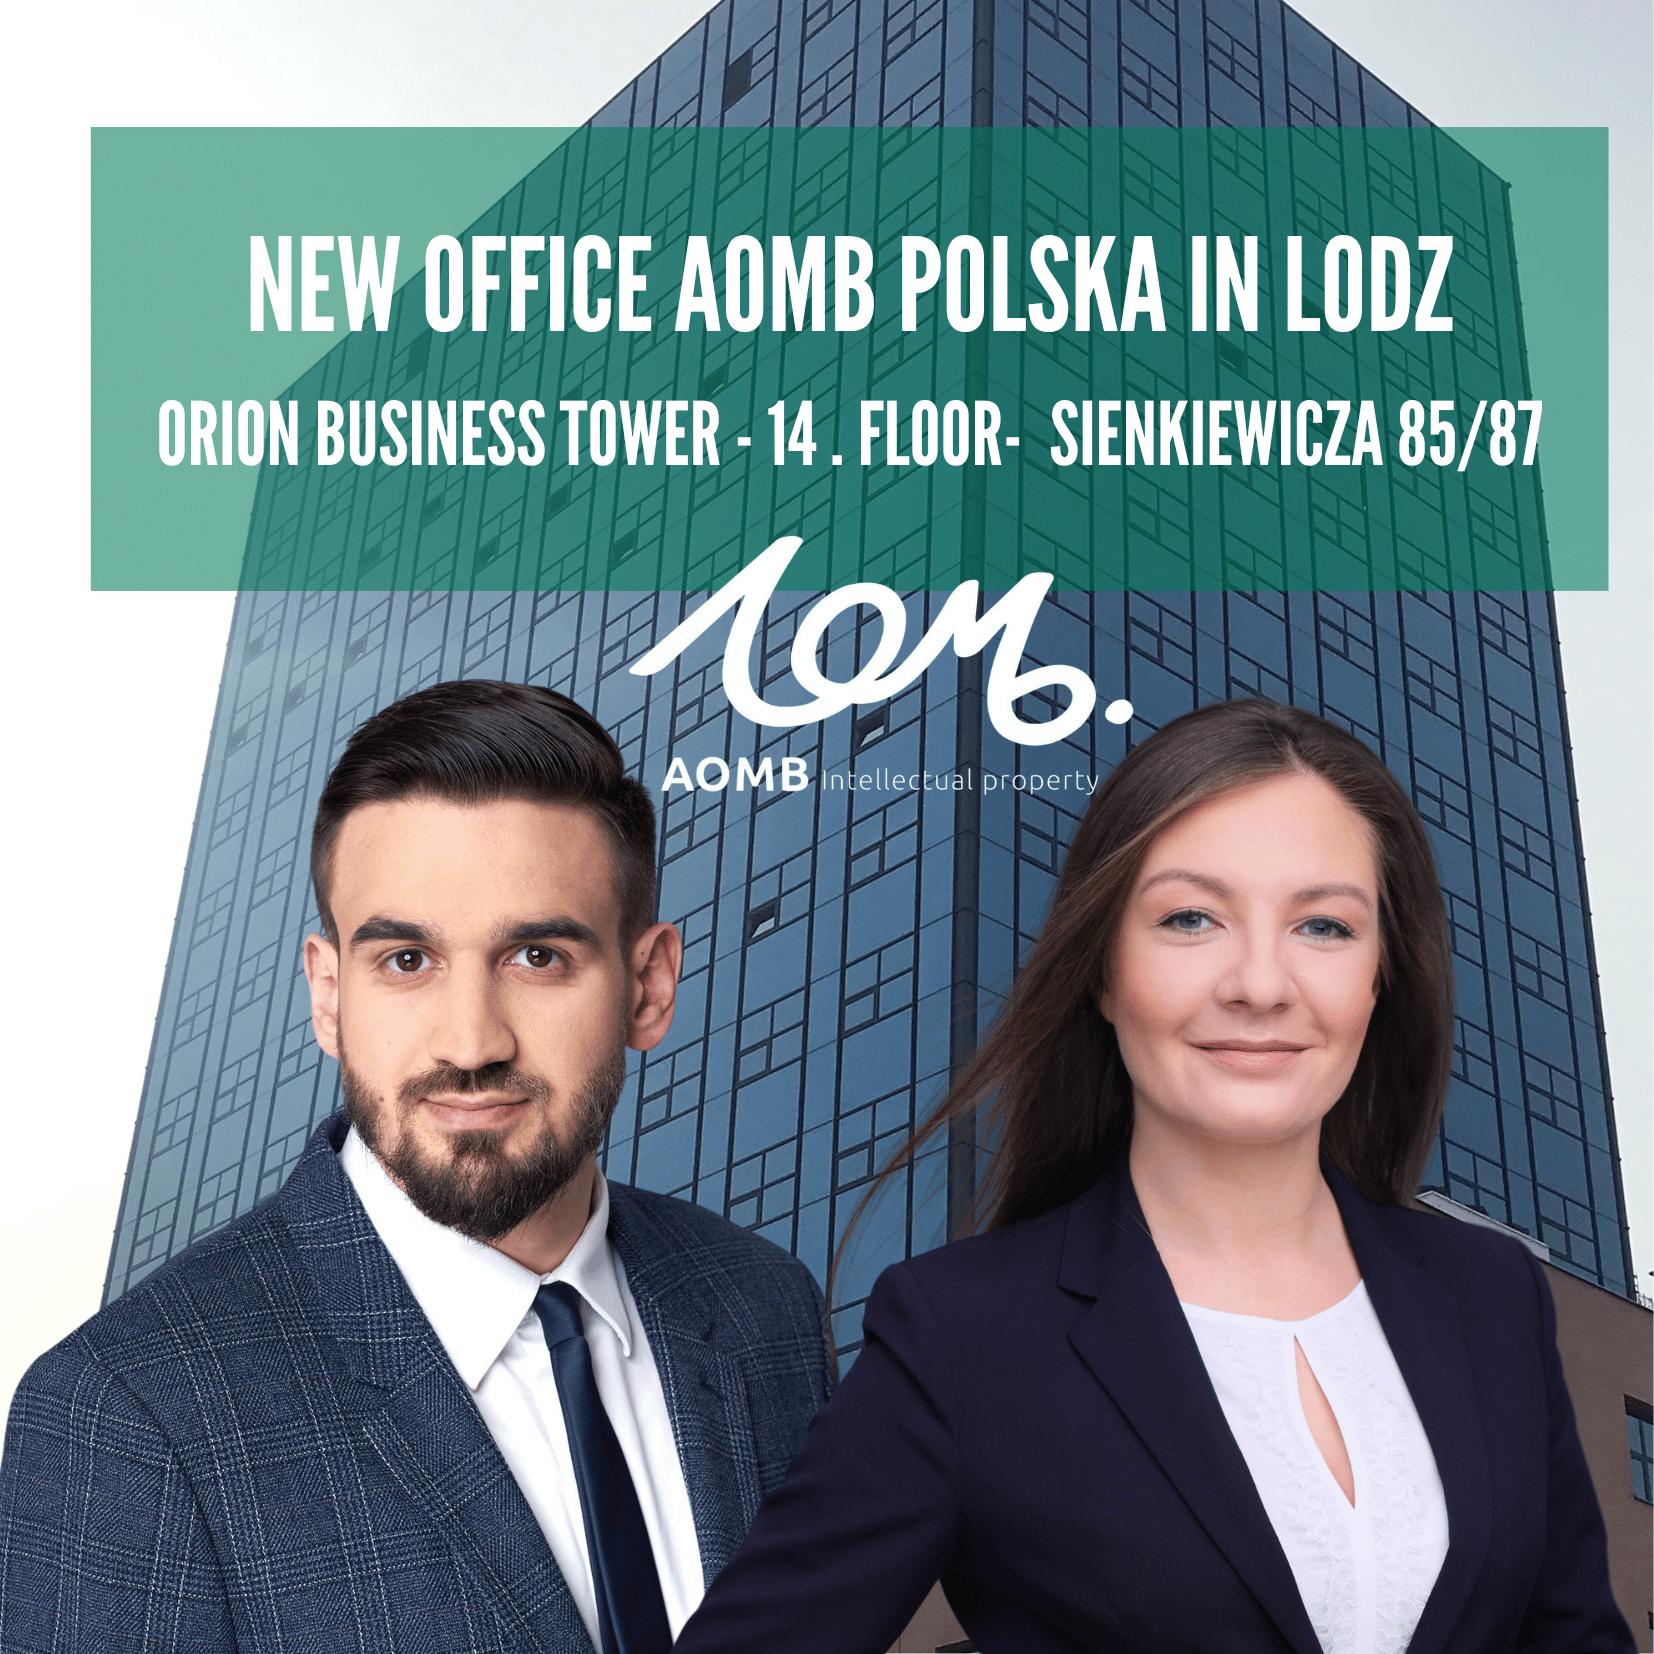 New address of the AOMB Polska office in Łódź!